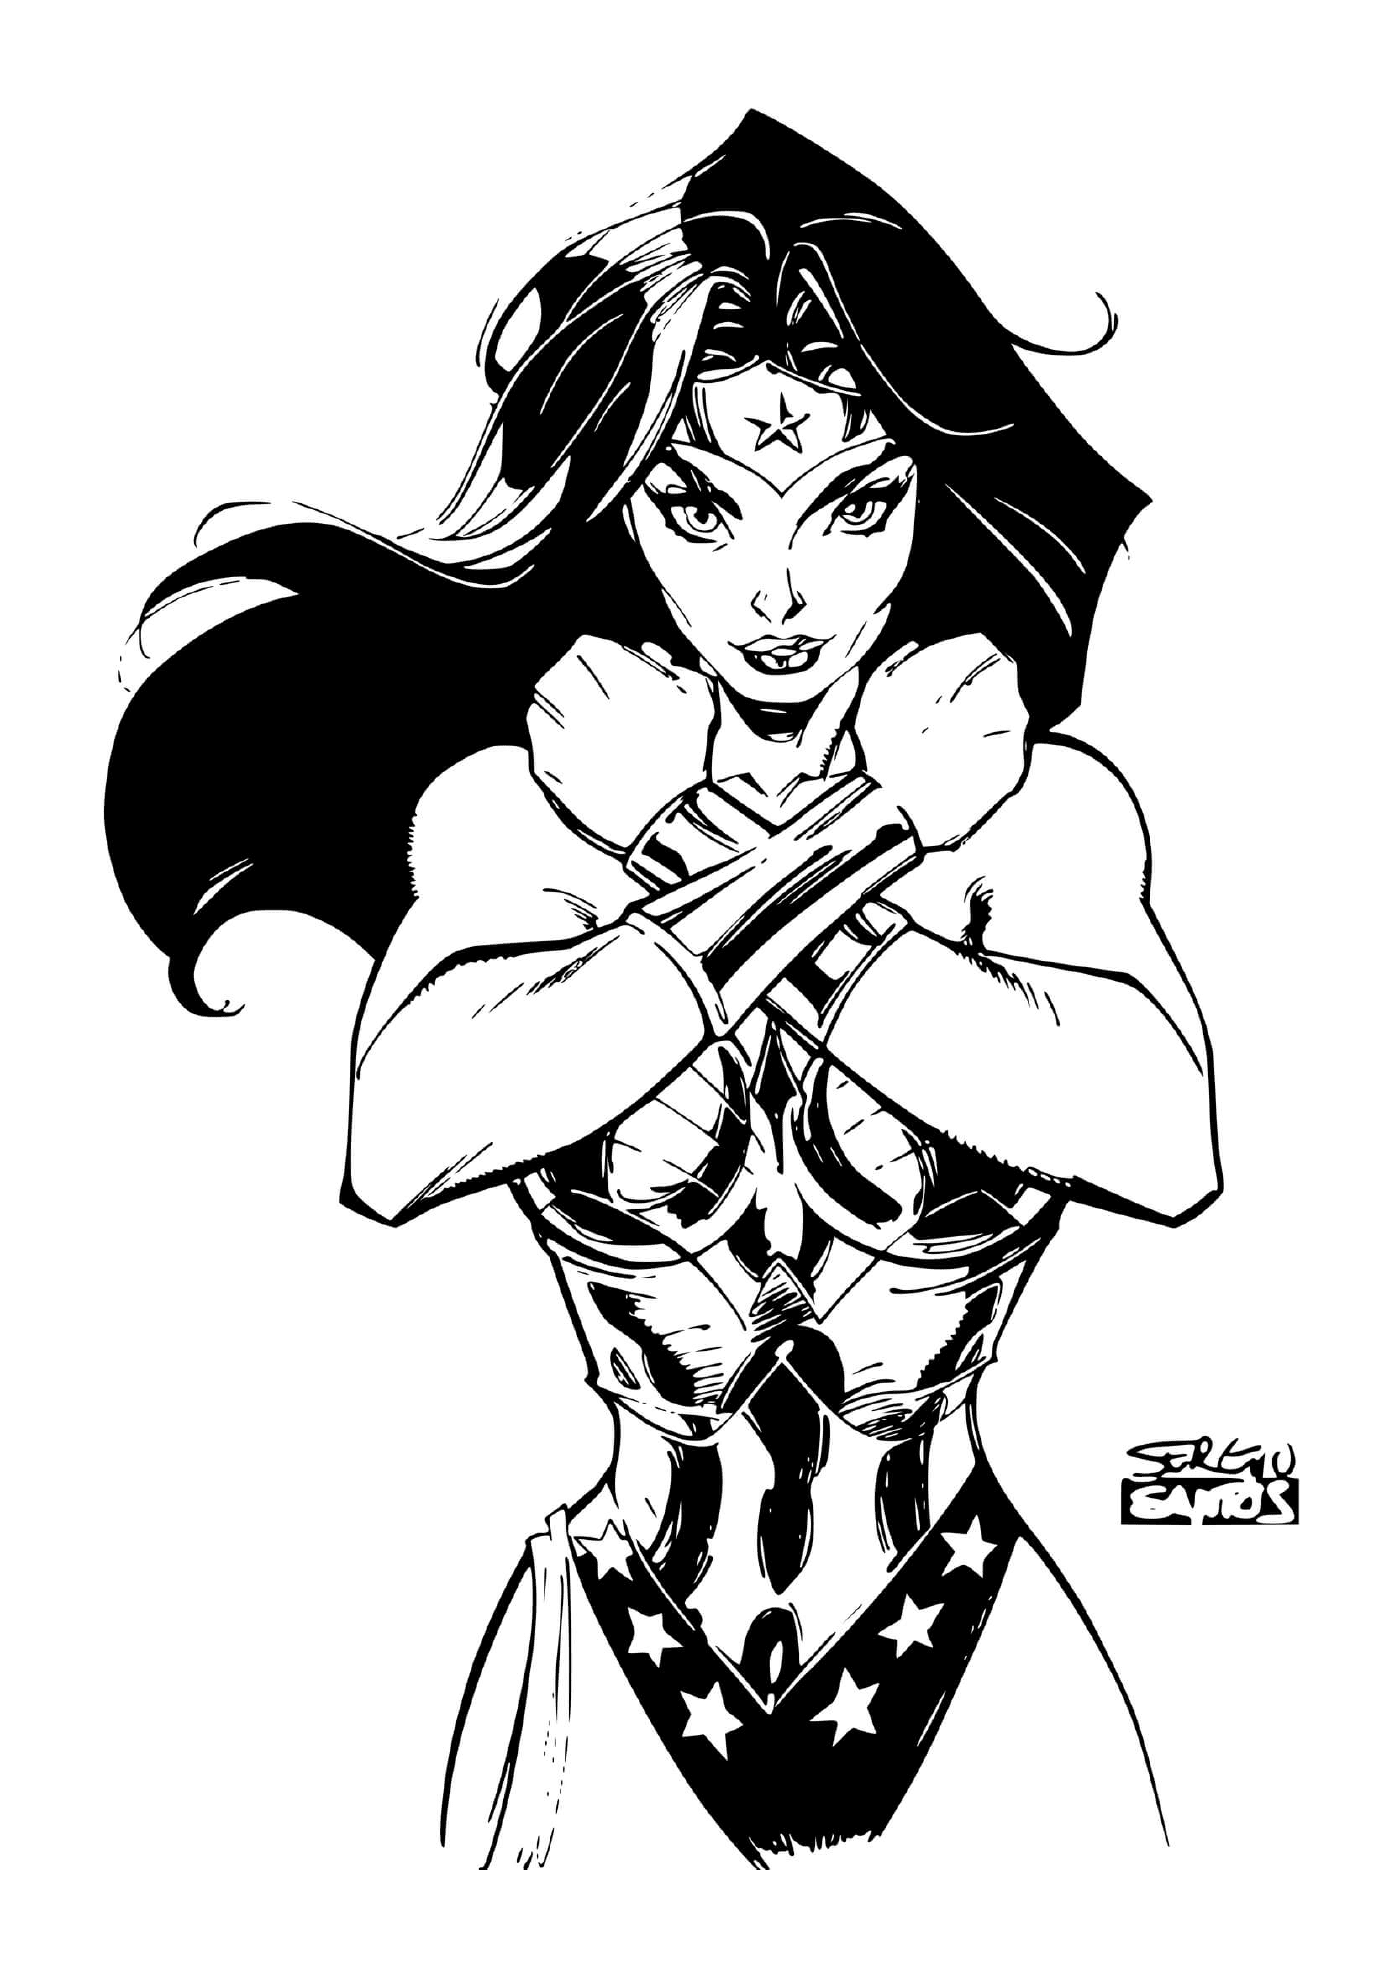  Wonder Woman by Sergioxantos 